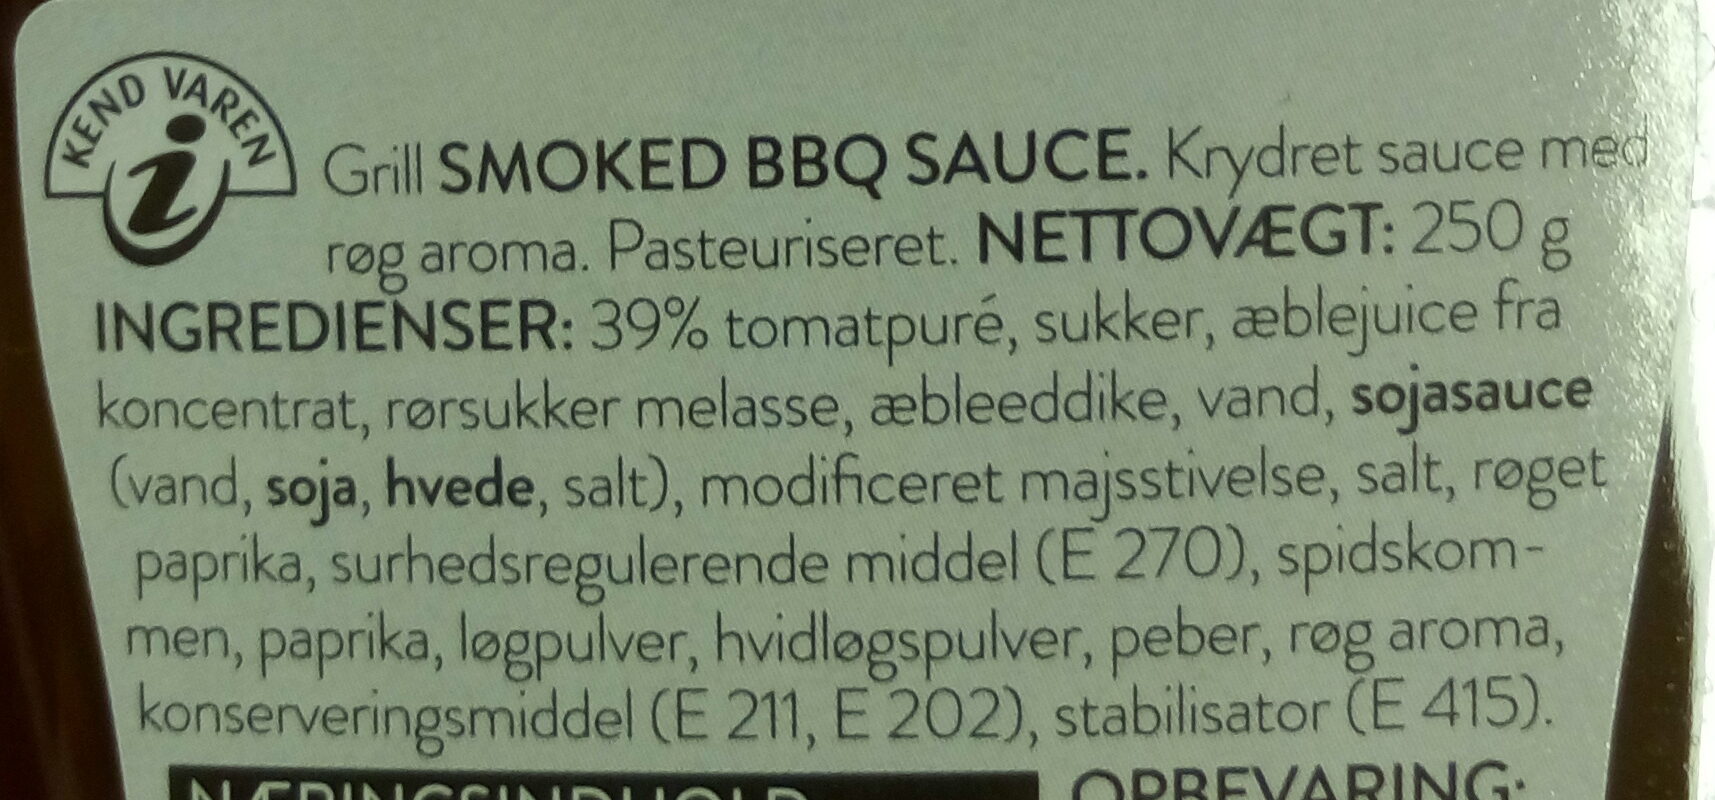 Smoked BBQ Sauce - Ingredients - da